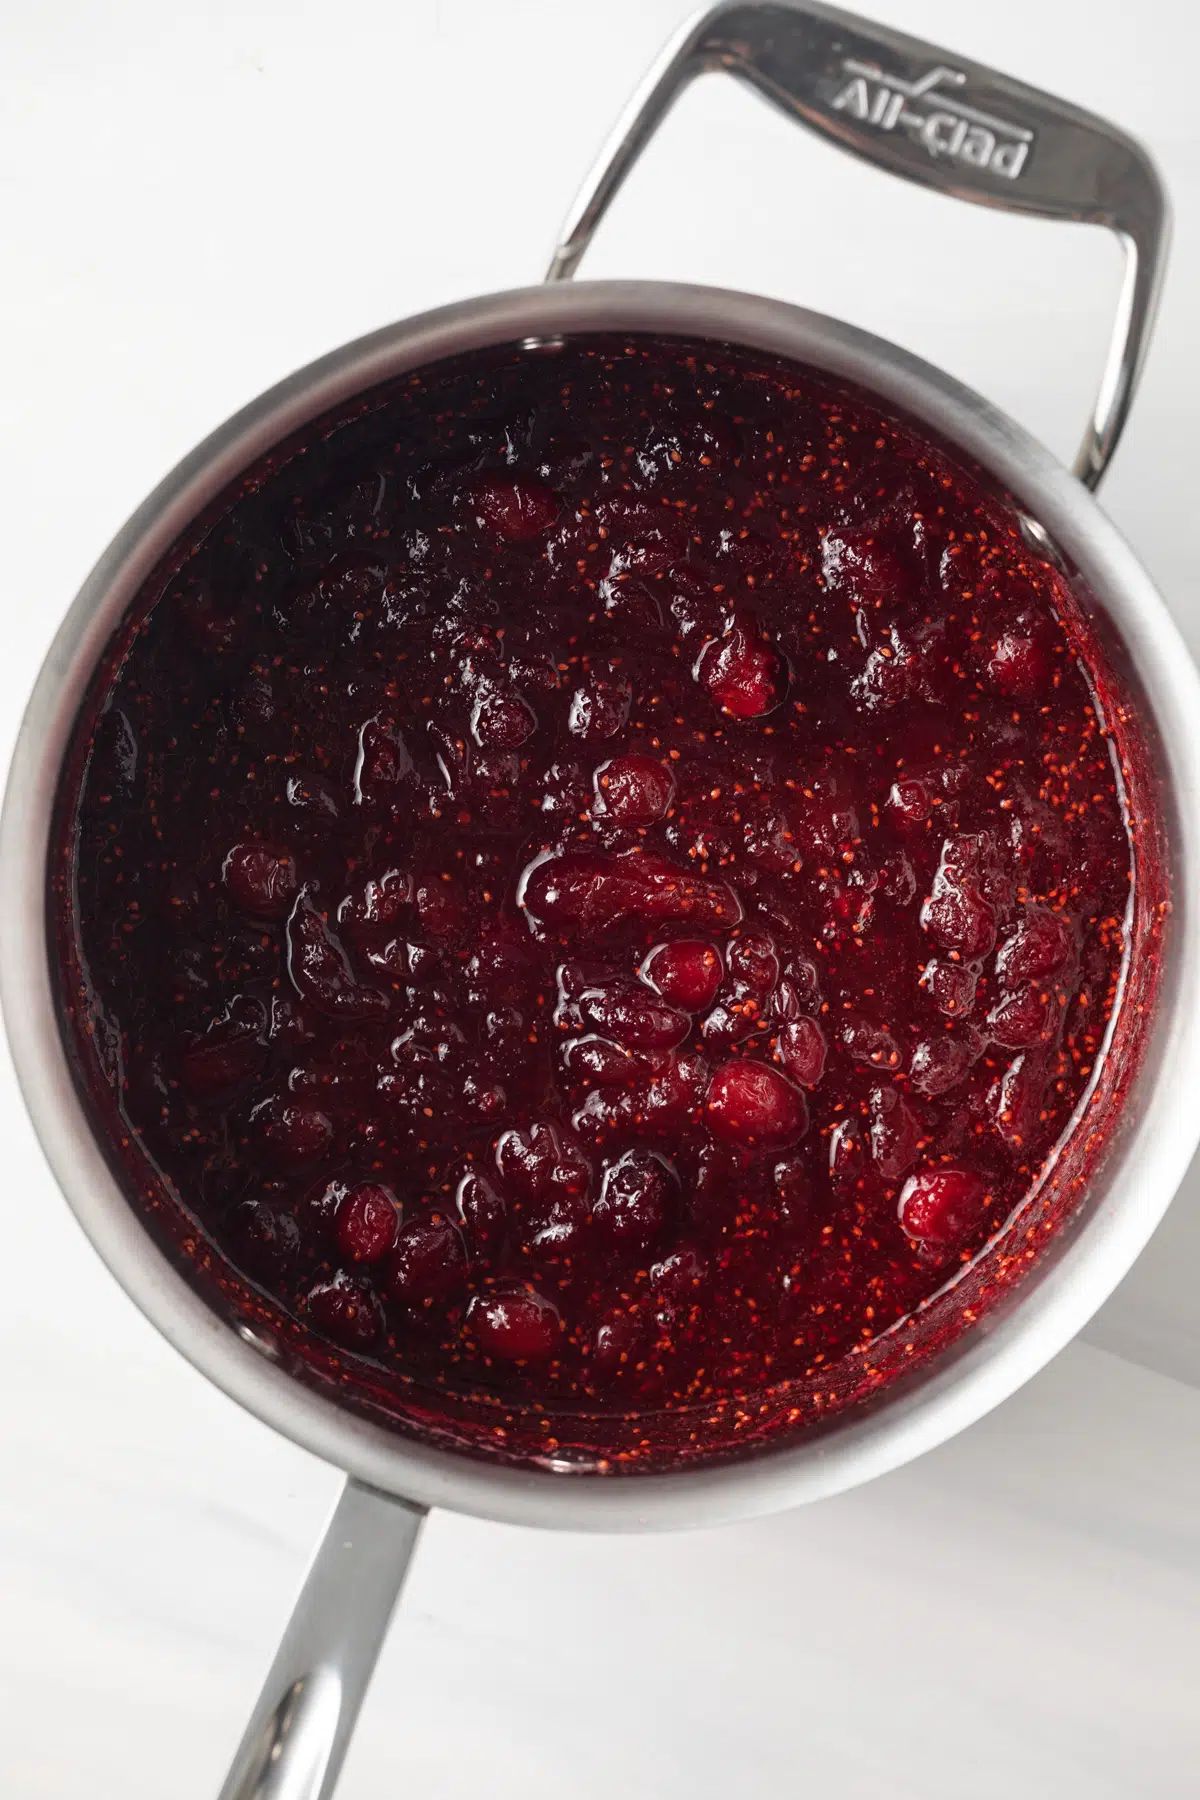 Cranberry sauce in a saucepan.